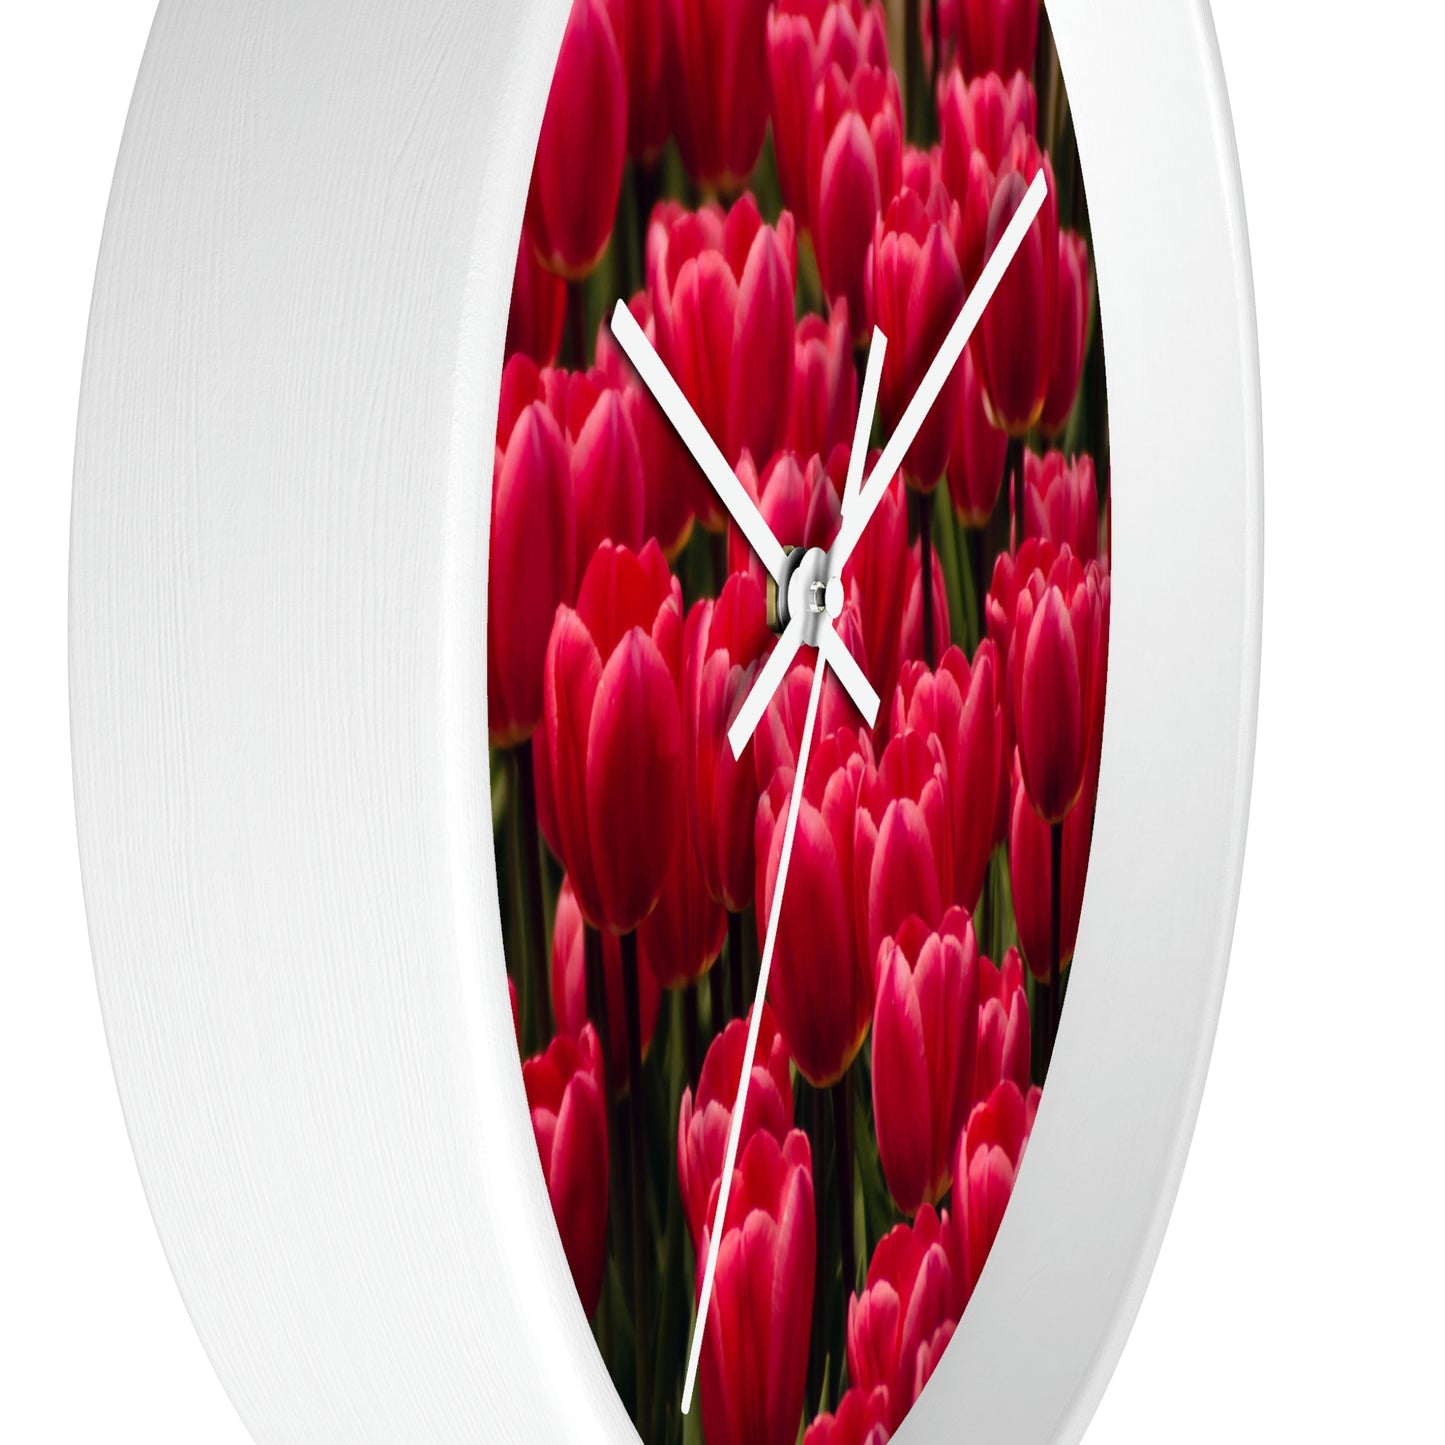 Flowers 15 Wall Clock